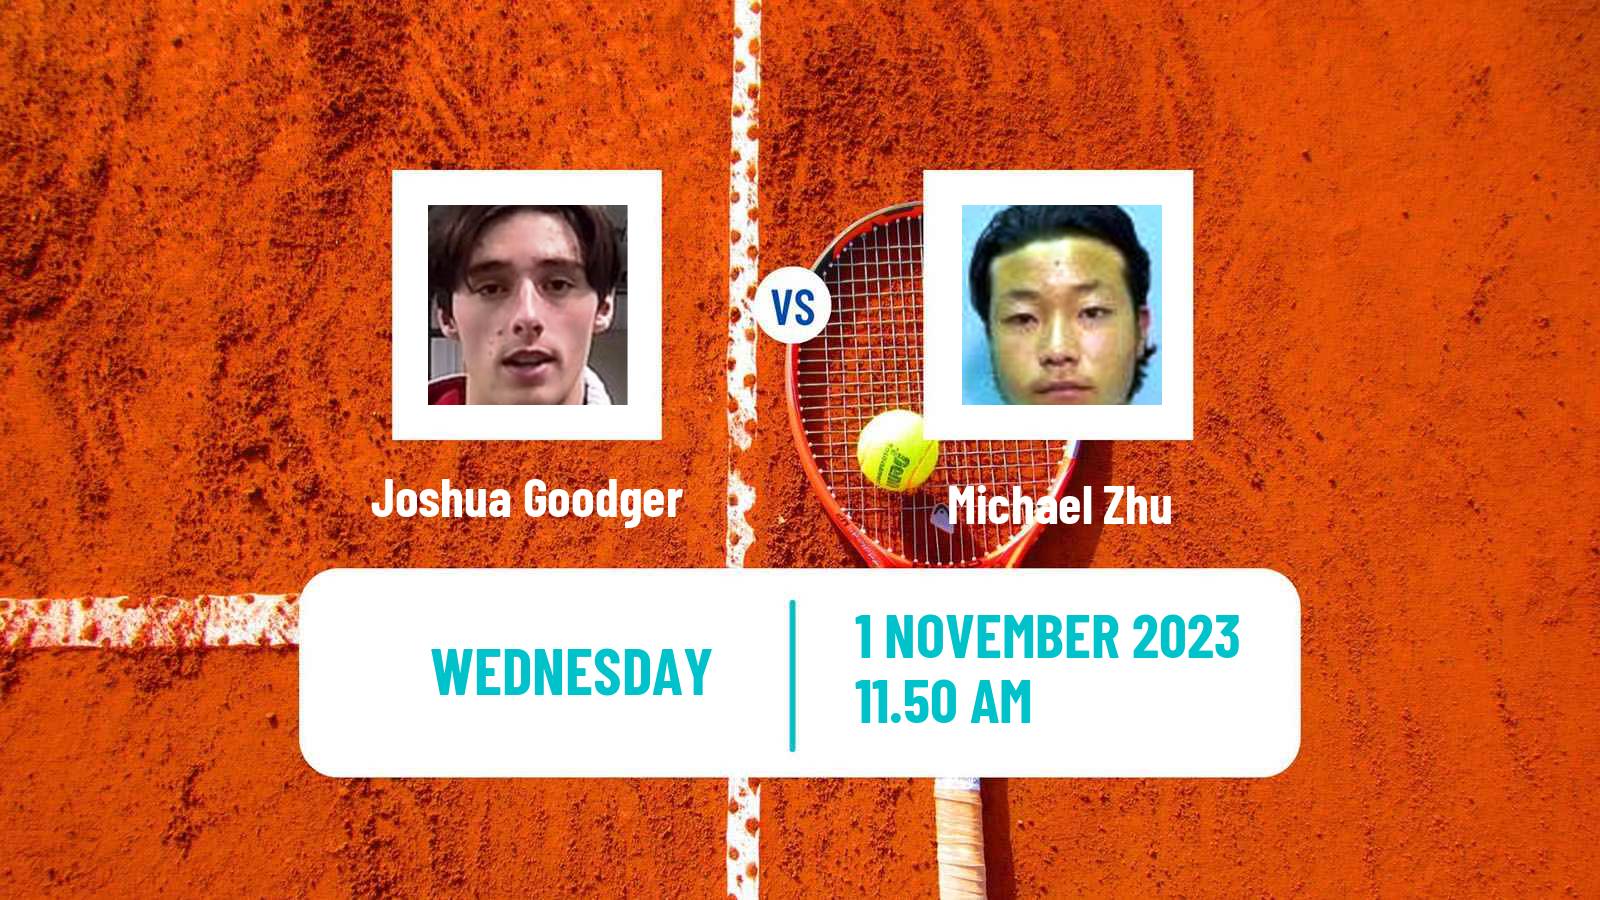 Tennis ITF M25 Sunderland 2 Men Joshua Goodger - Michael Zhu